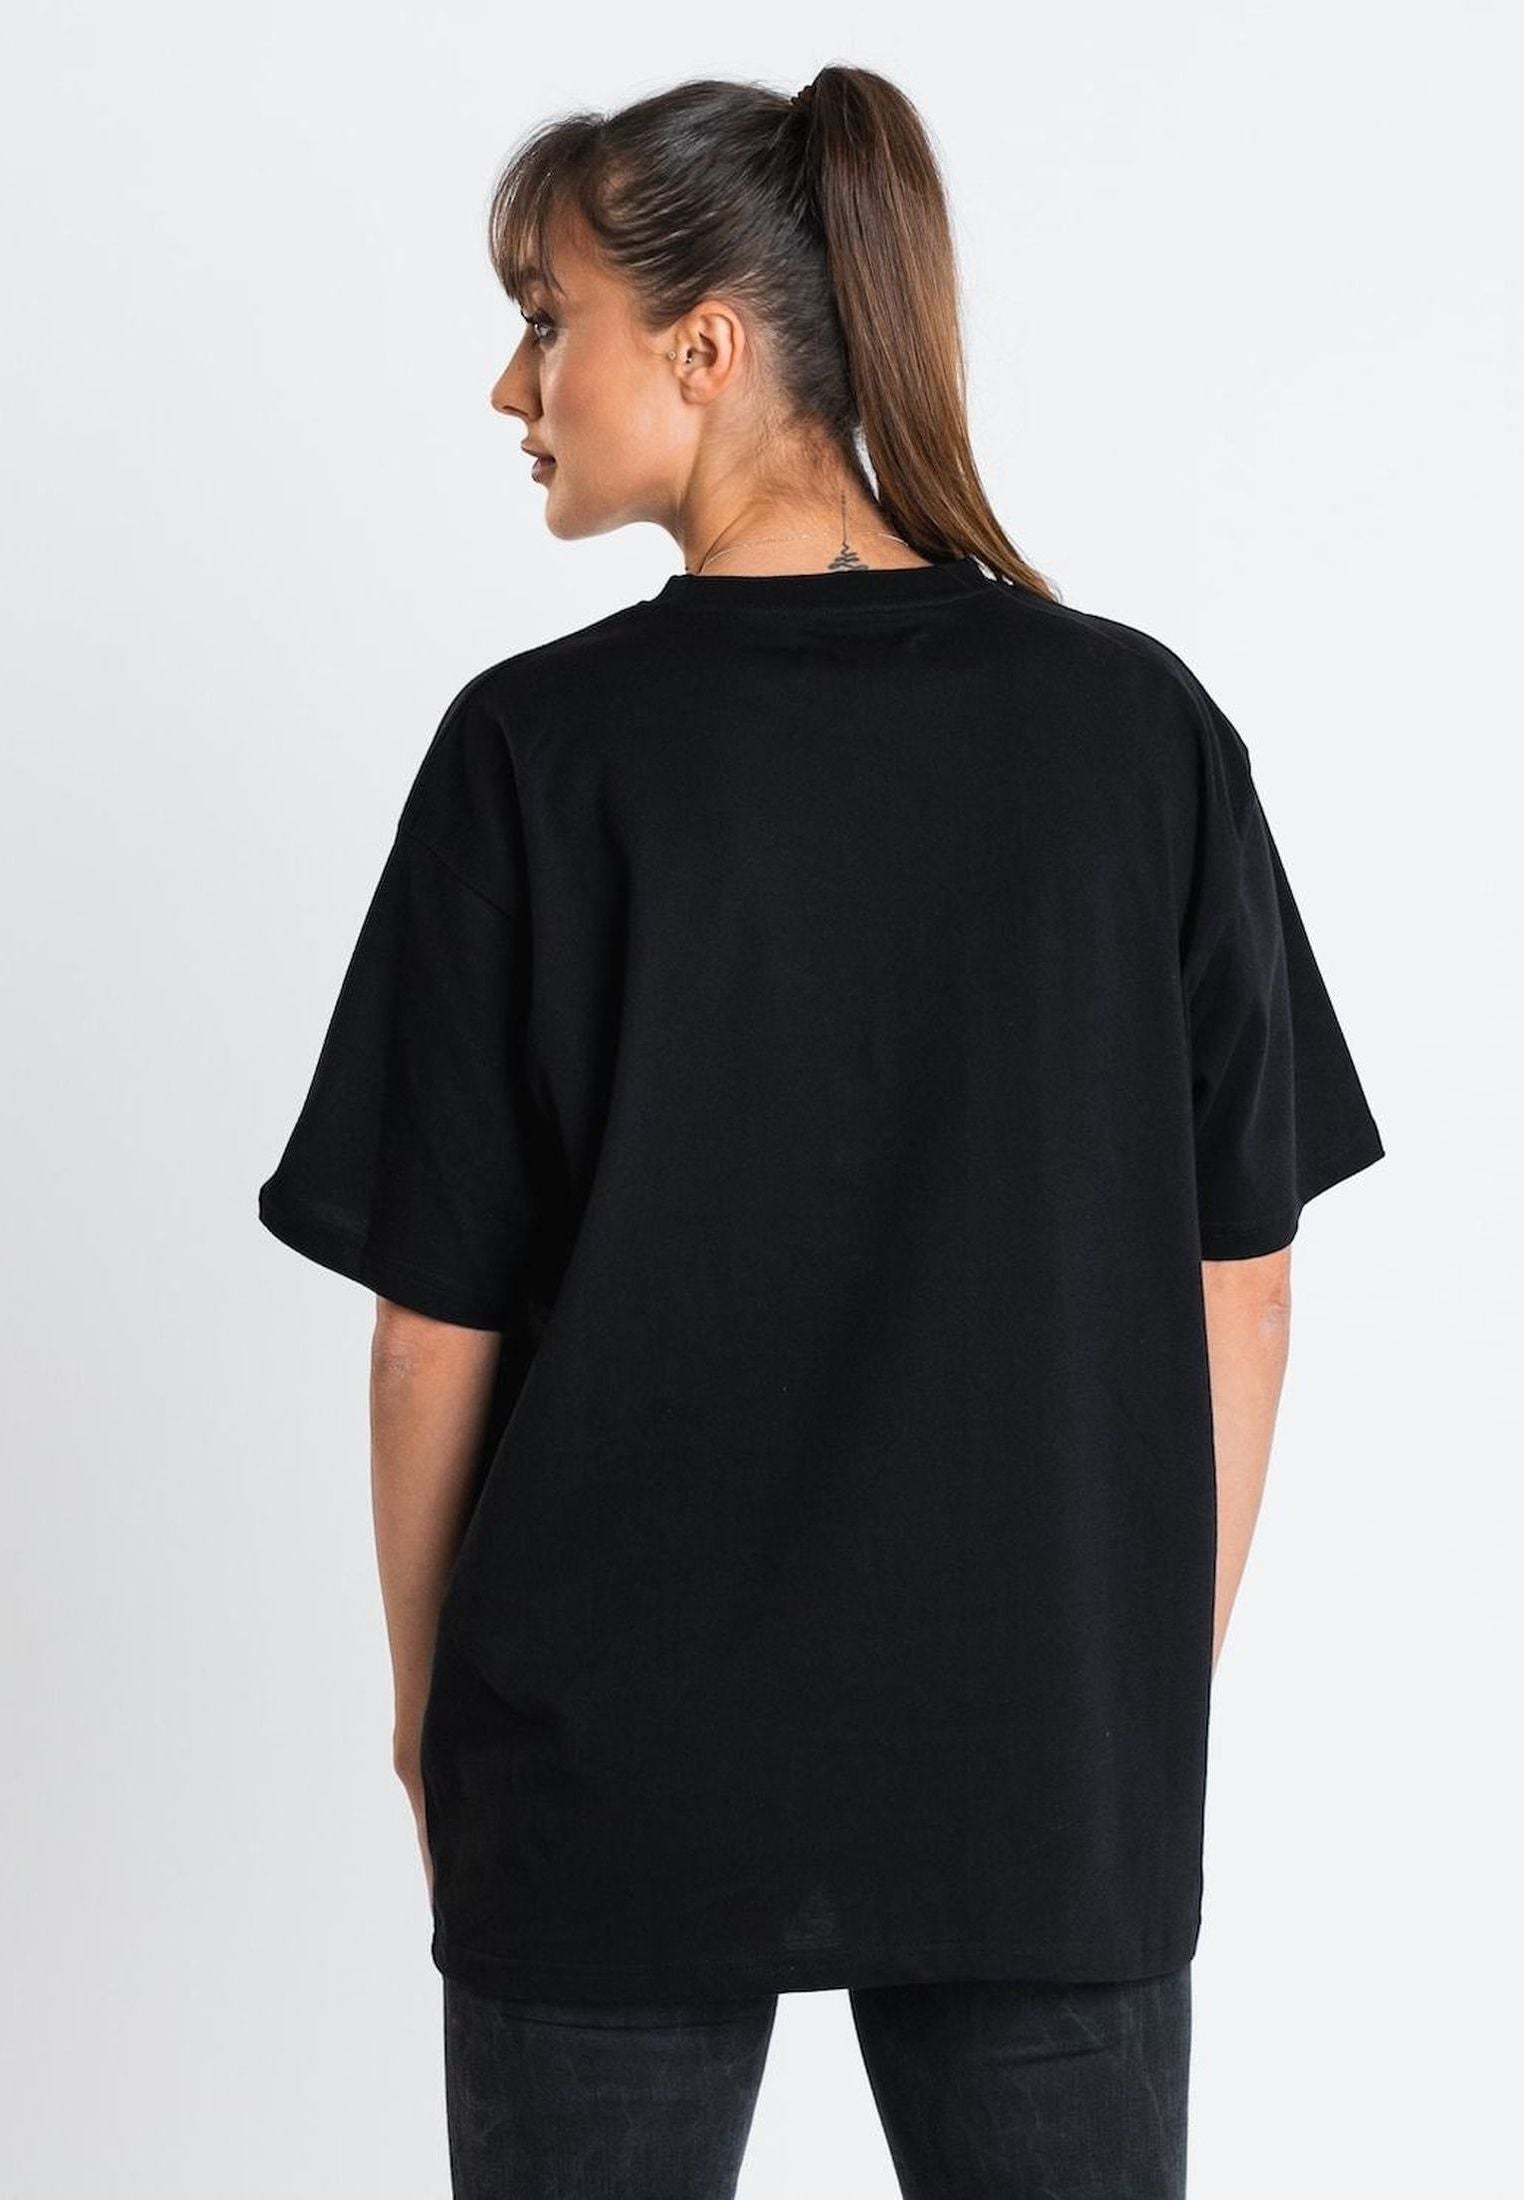 Unkl Skittlez T-Shirt black im BAWRZ® One Stop Hip-Hop Shop